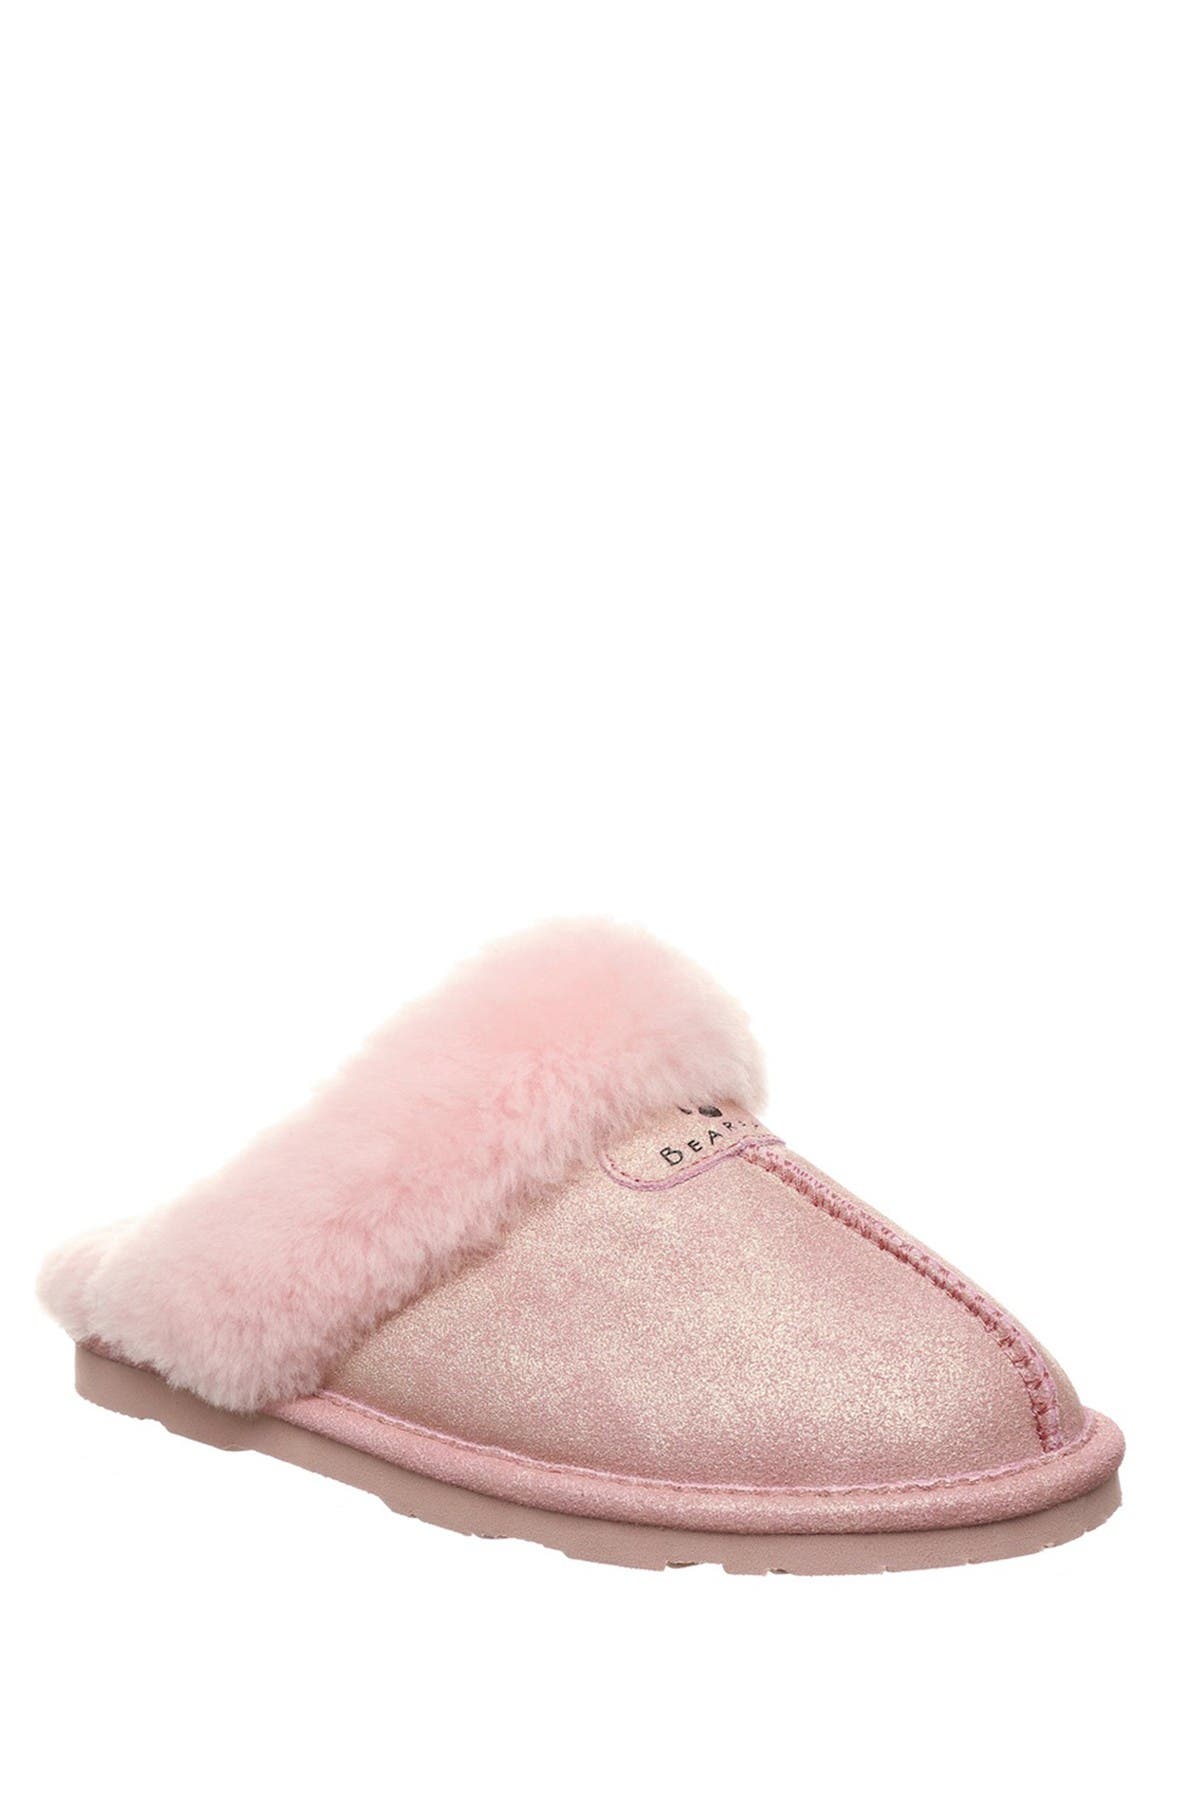 bearpaw slippers womens